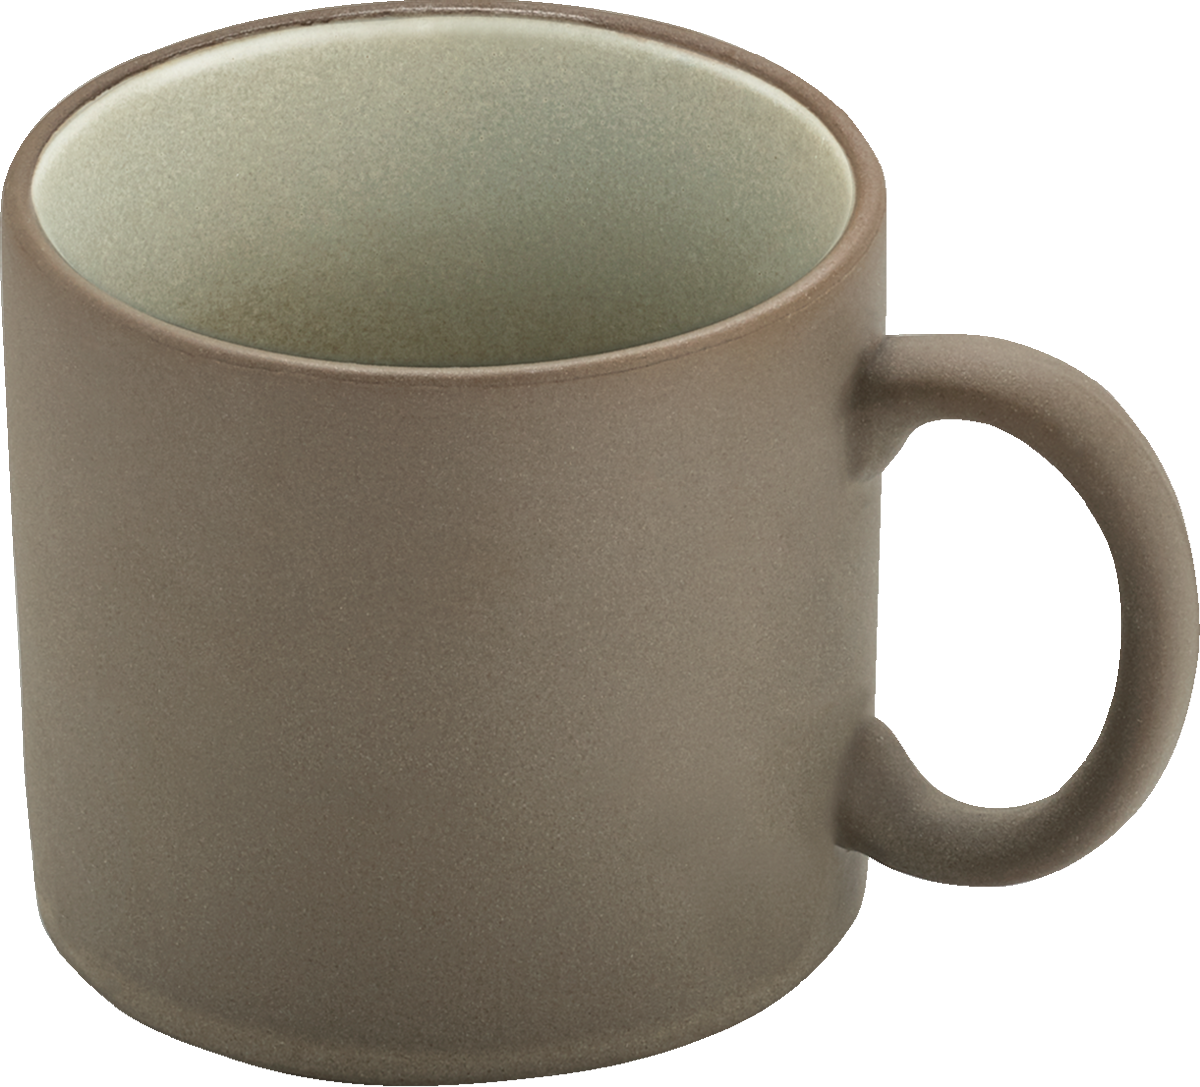 Cup beige/grey 0.20l